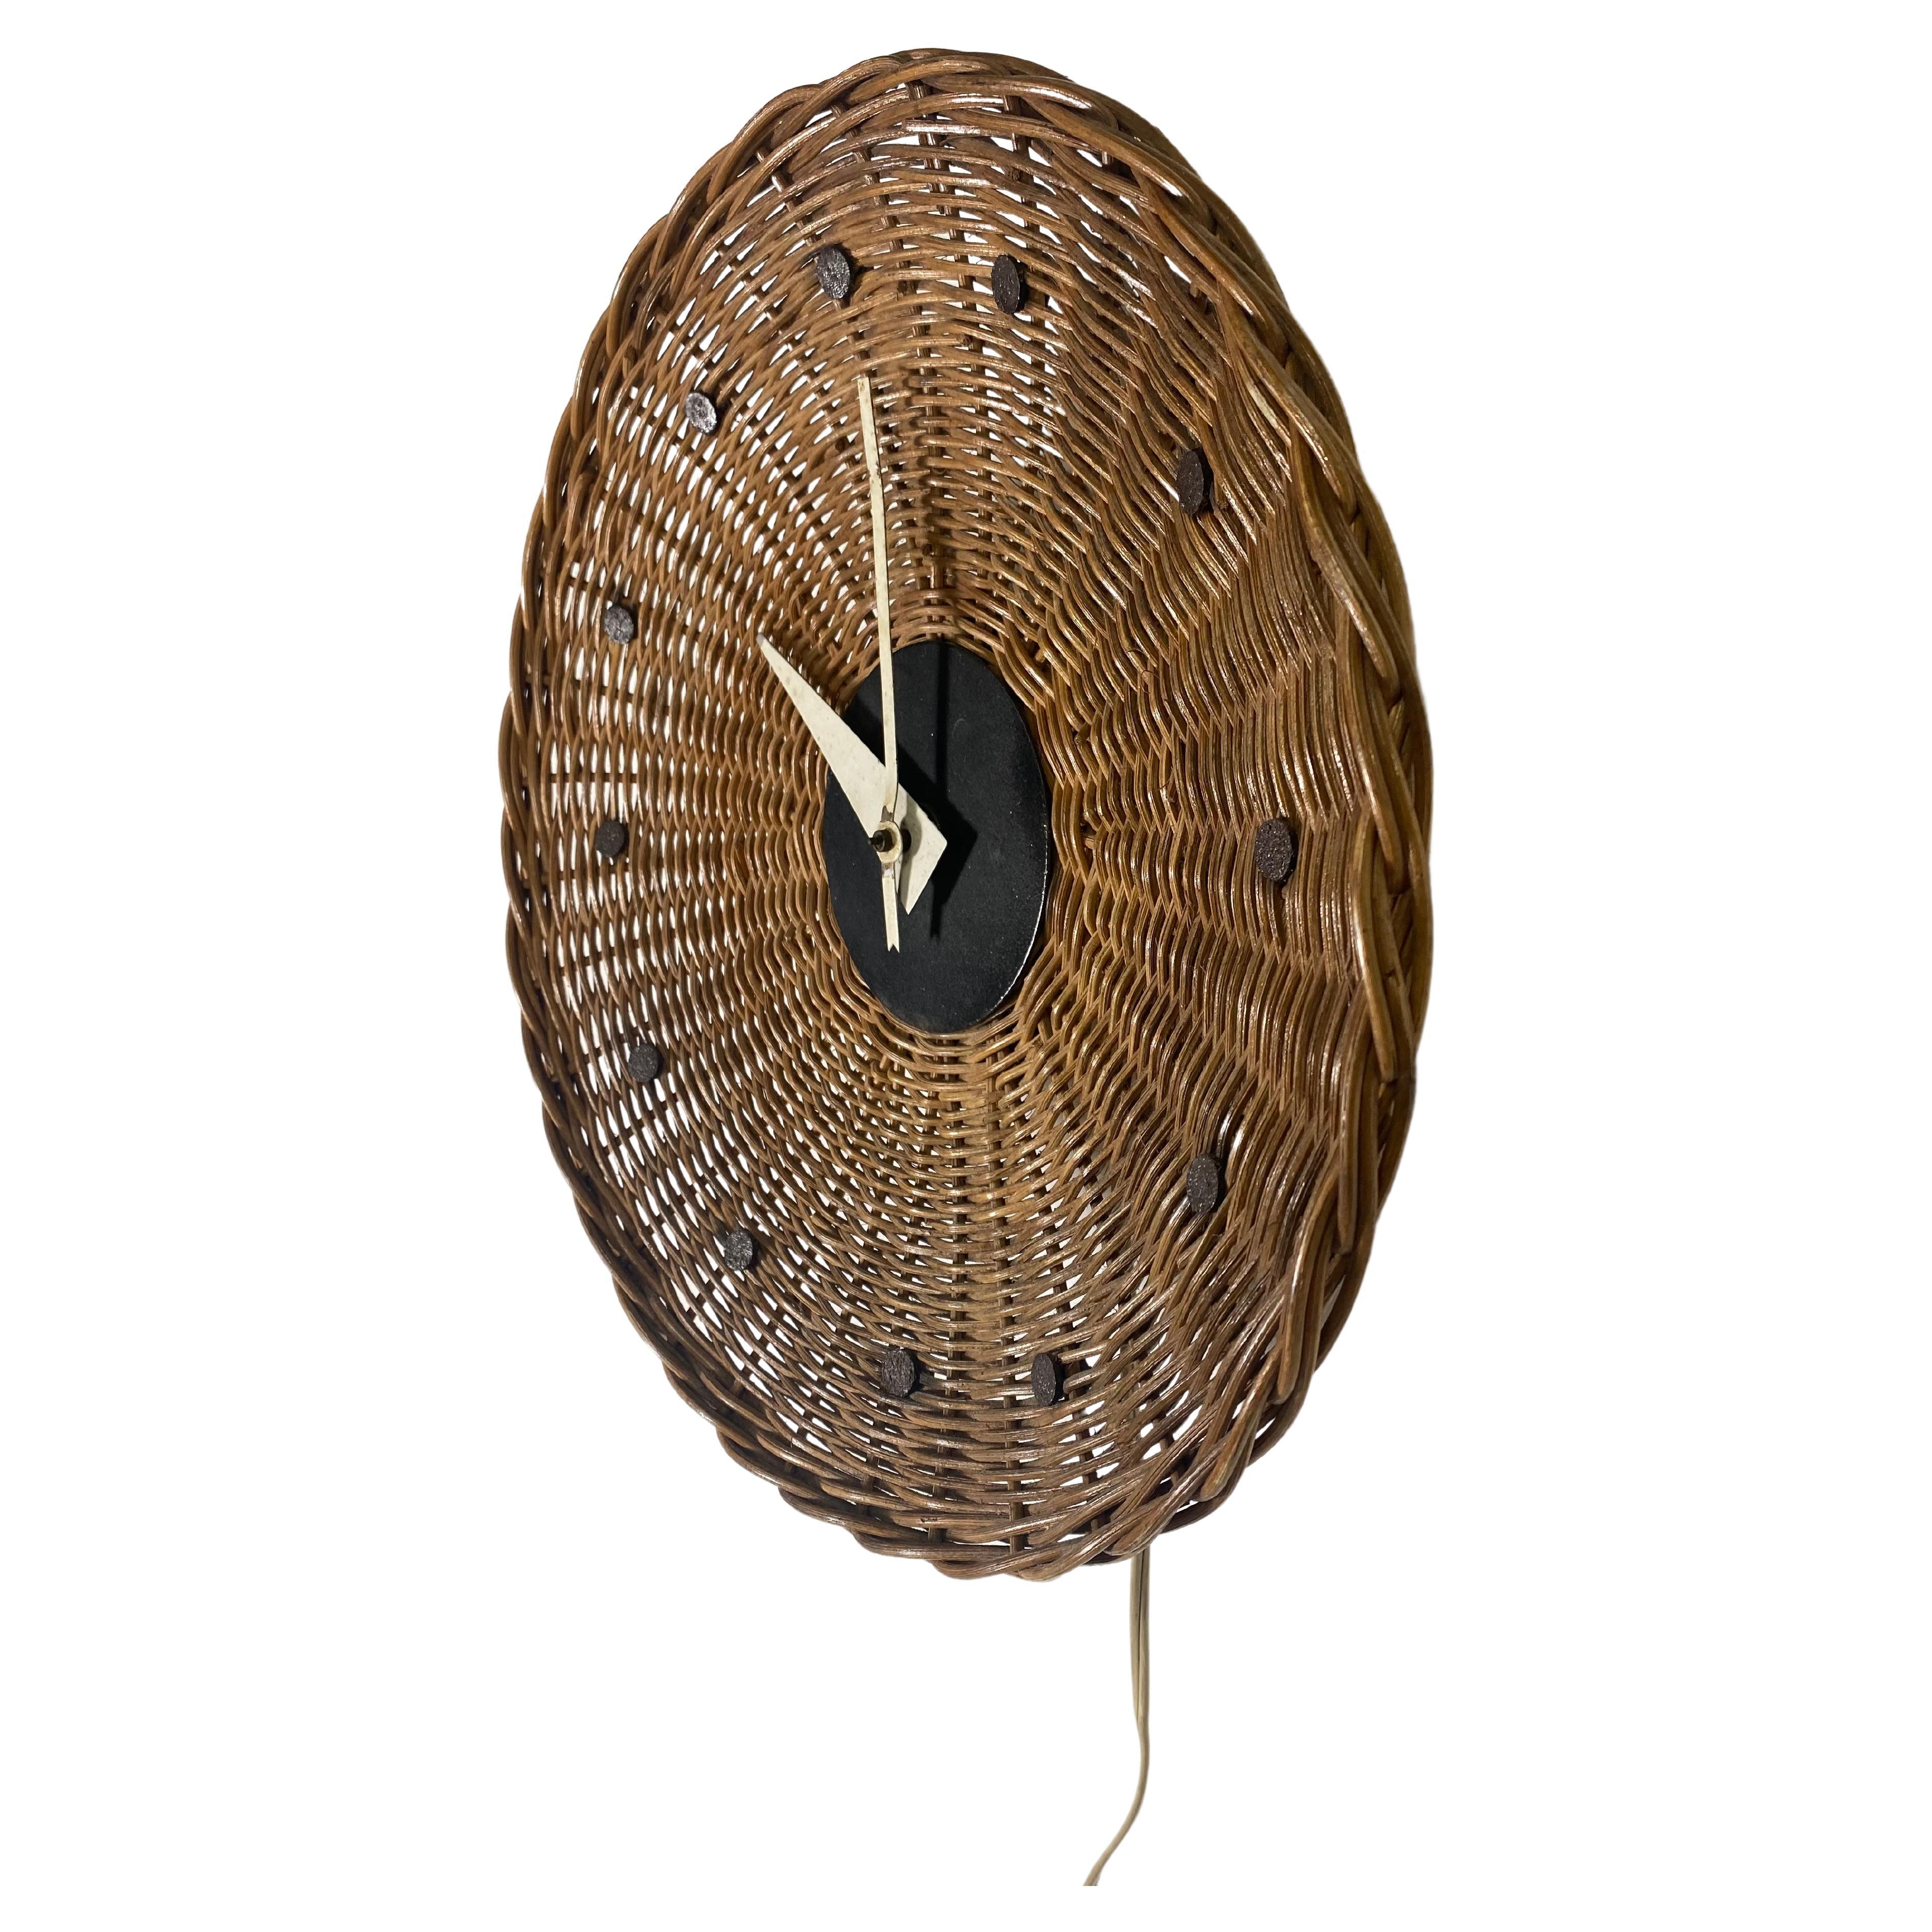 Classic Modernist Wicker Basket Clock by George Nelson for Howard Miller